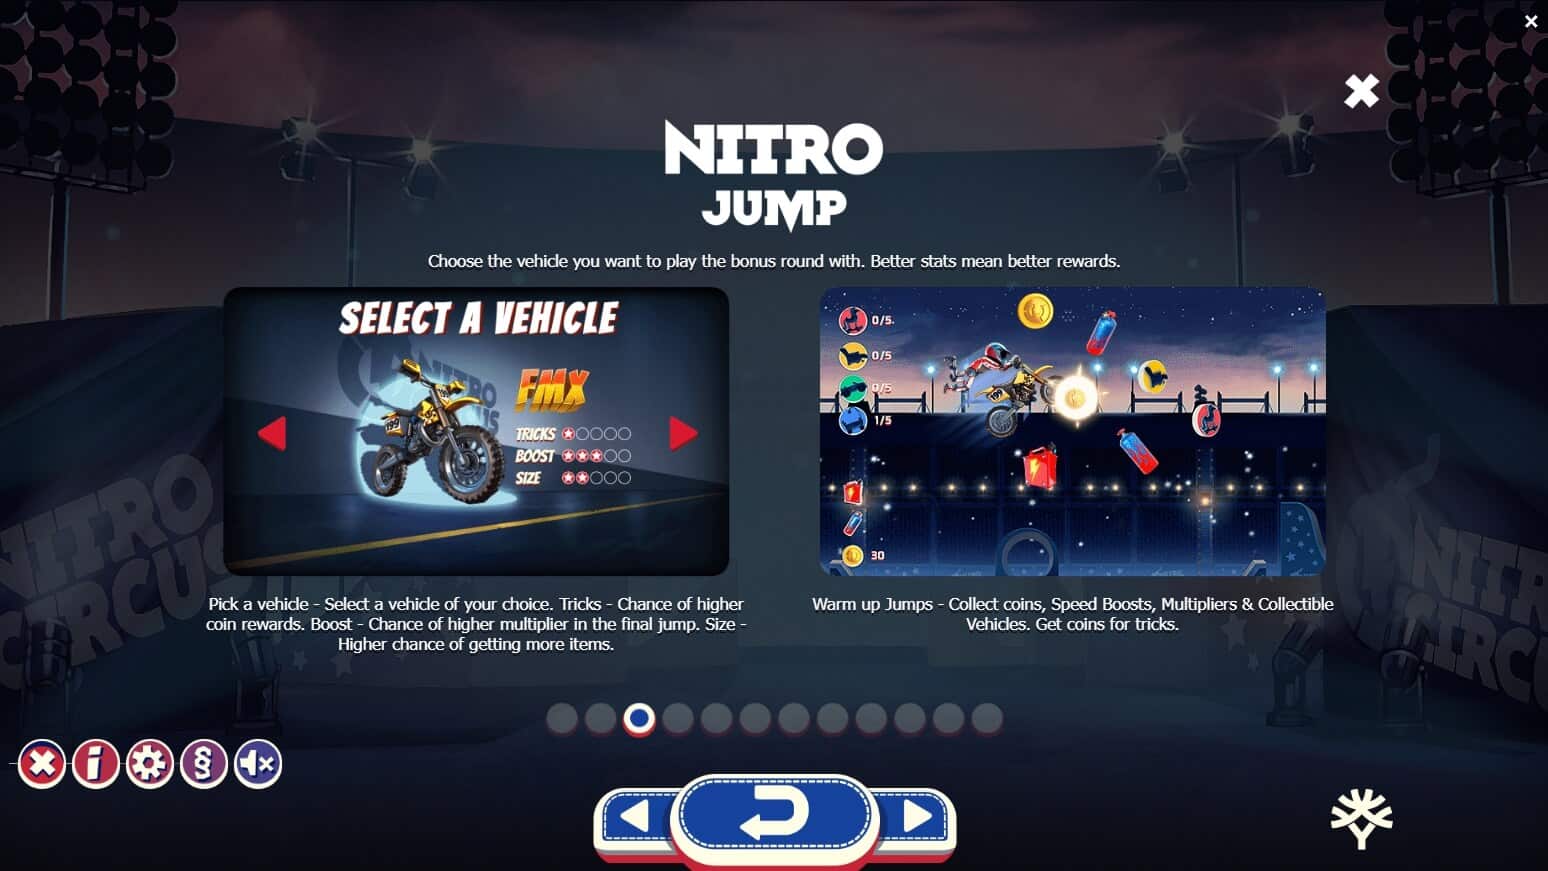 Nitro Circus Yggdrasil slotxo mobile